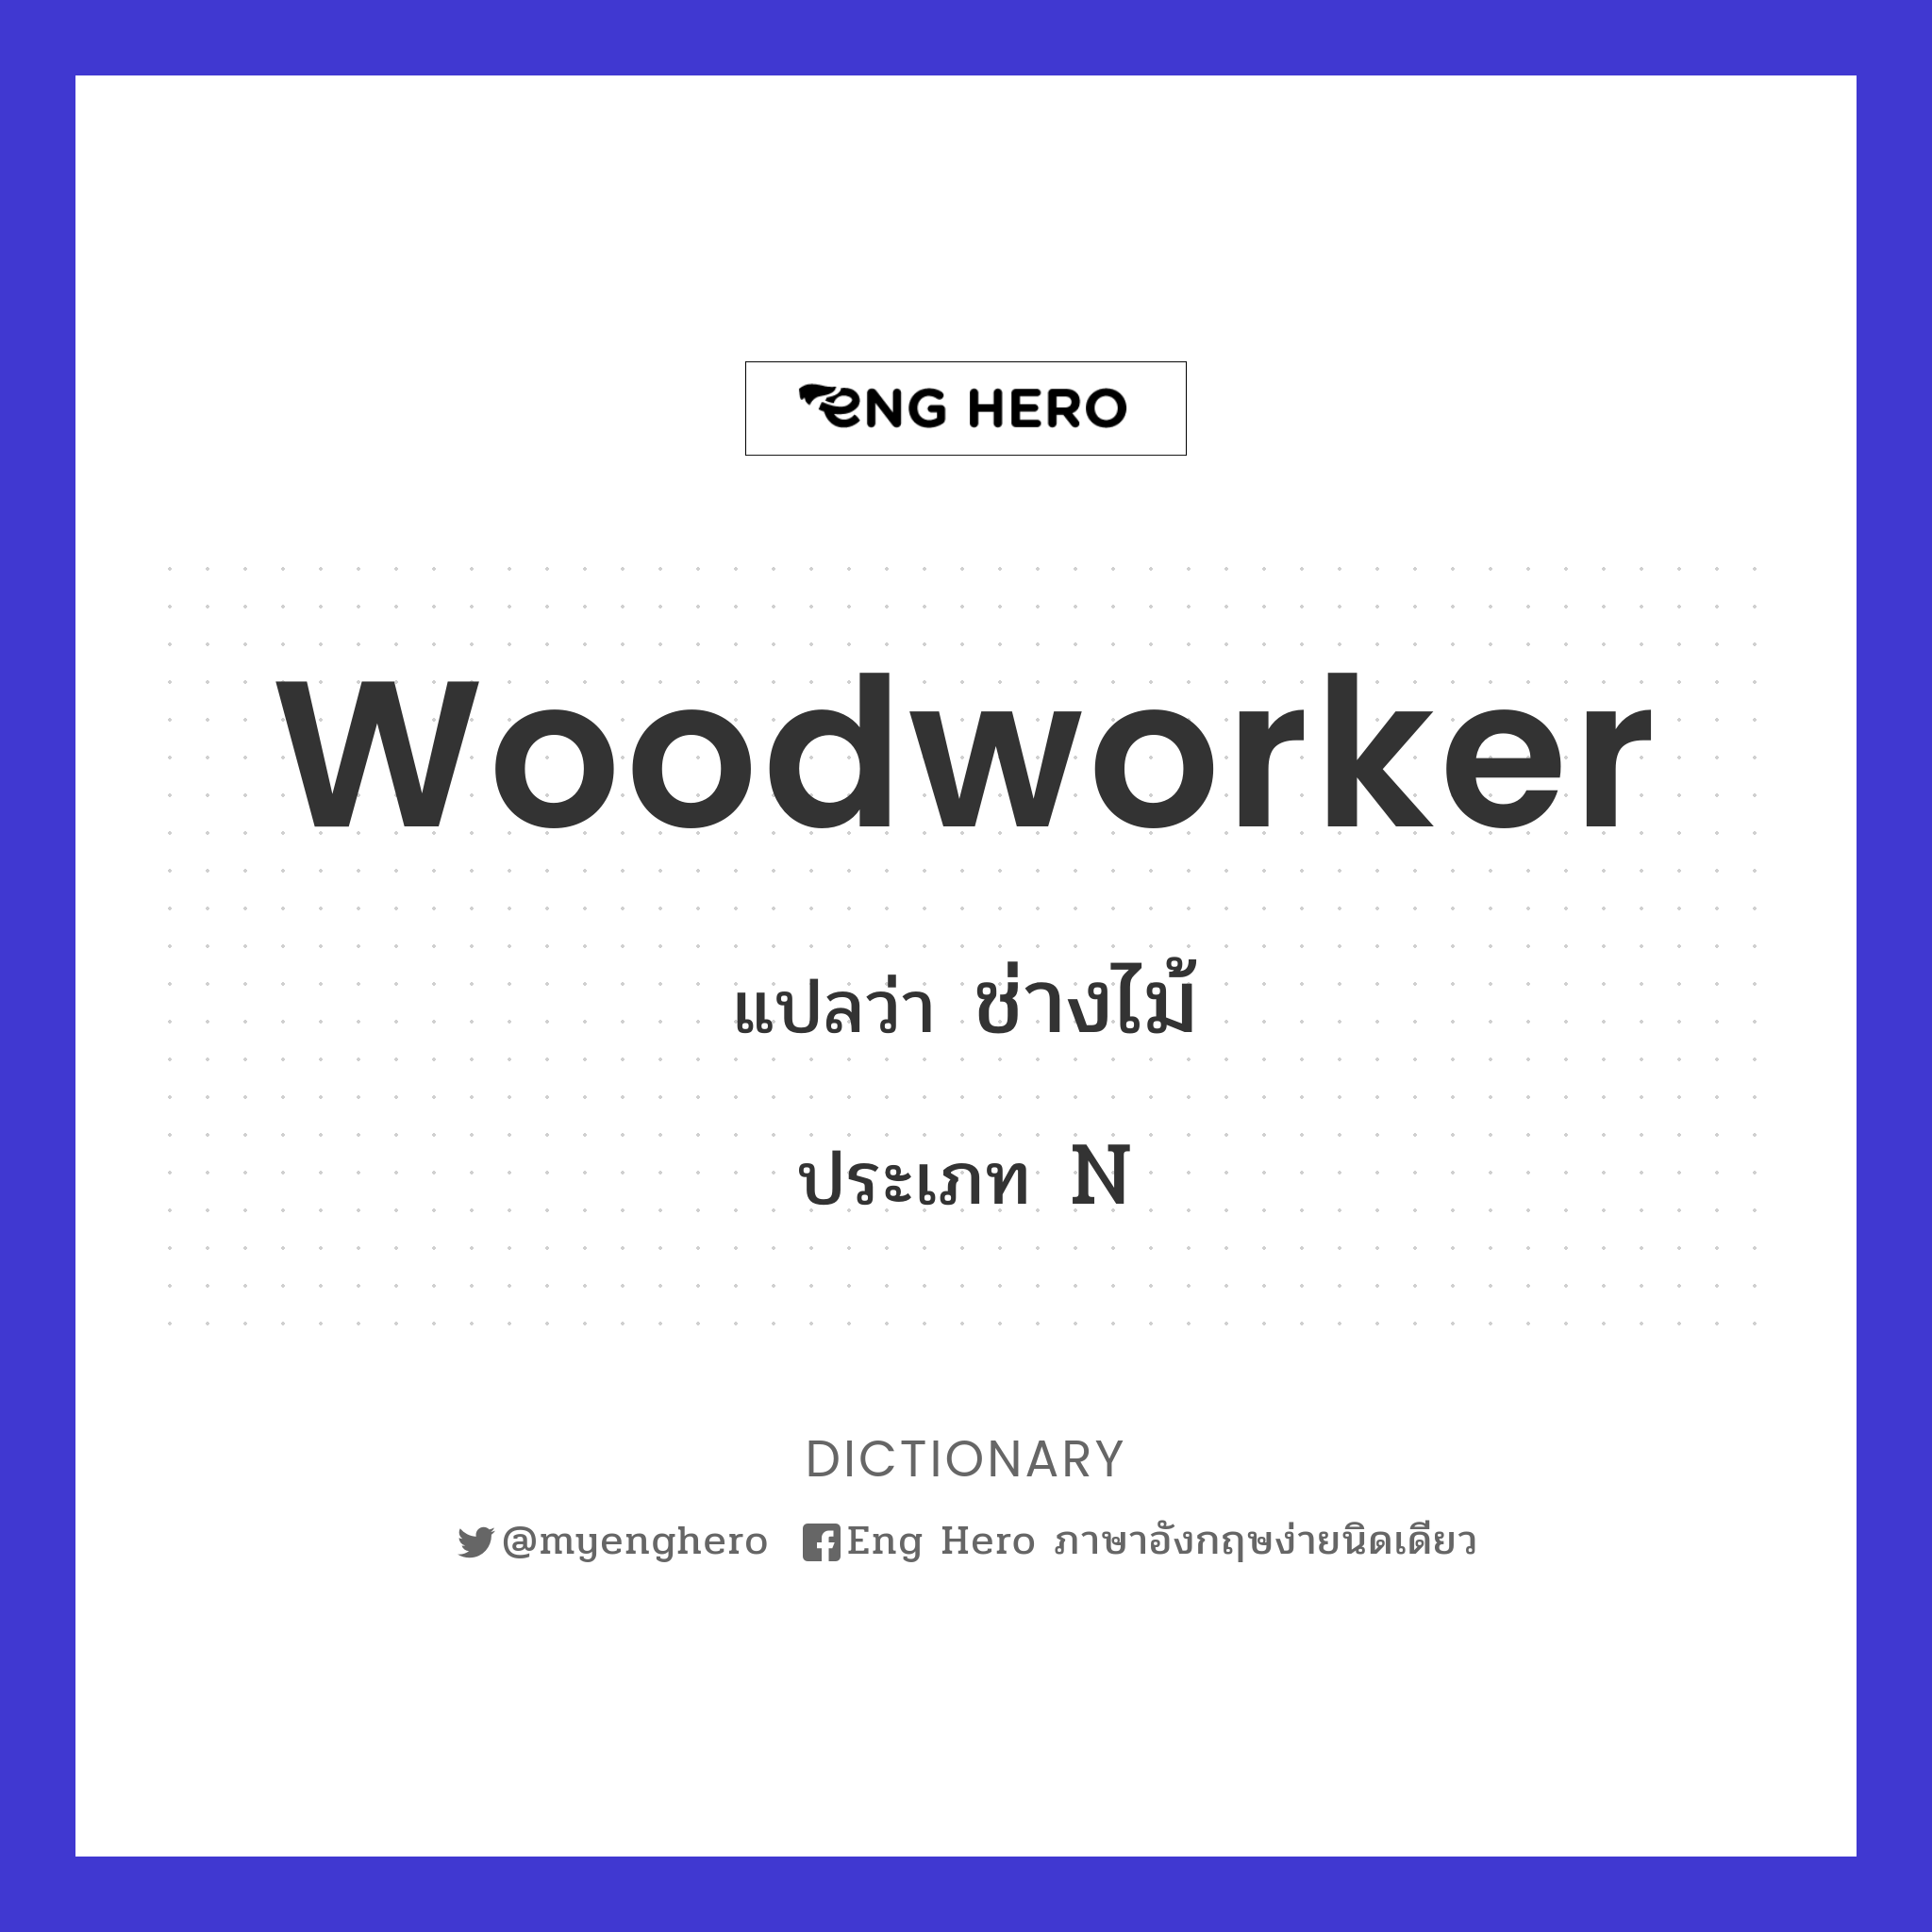 woodworker